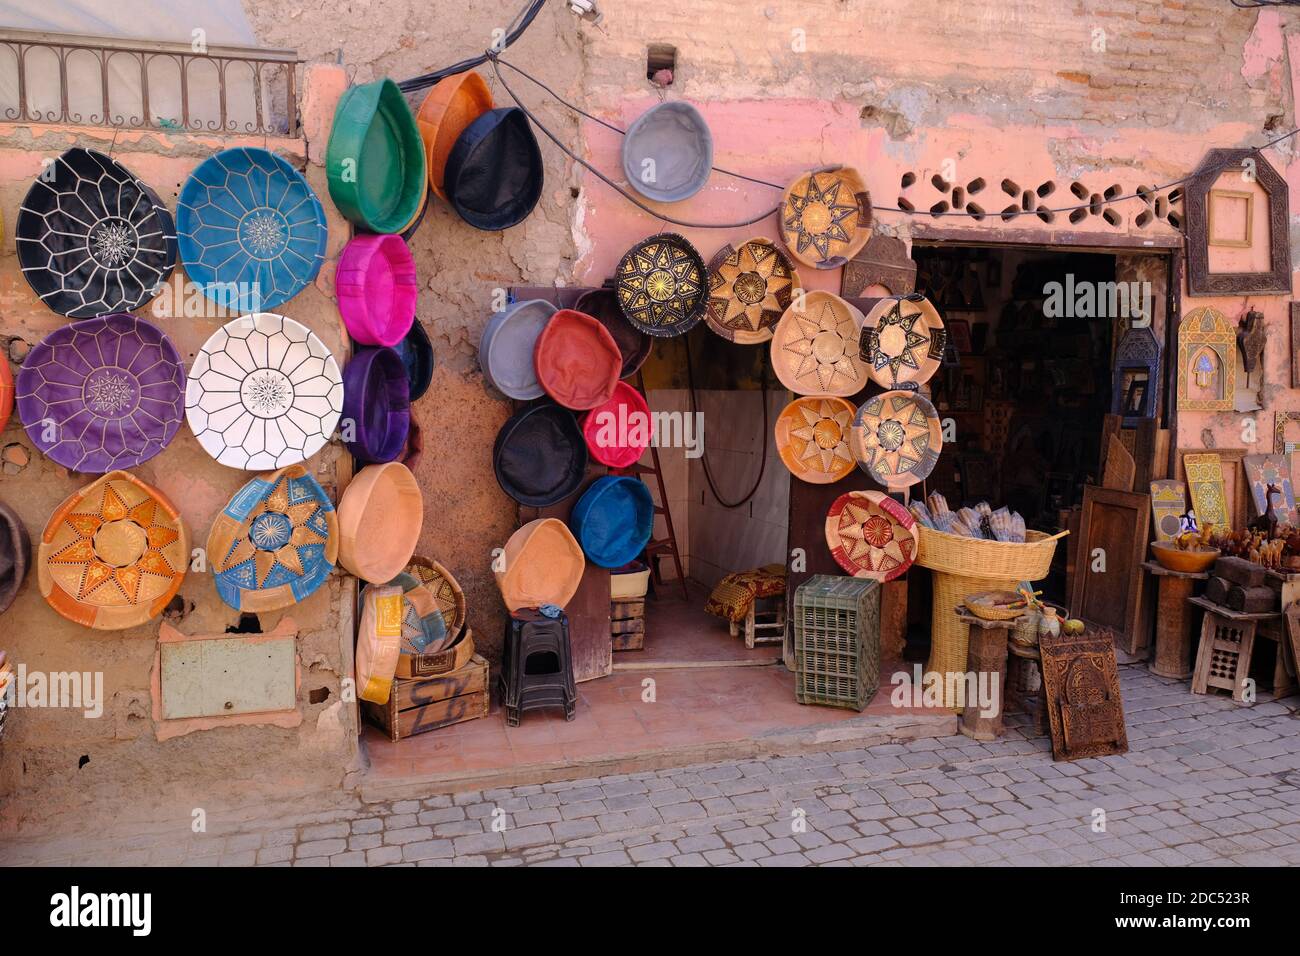 Morocco Marrakesh - Colorful Moroccan handmade ceramic plate shop Stock Photo